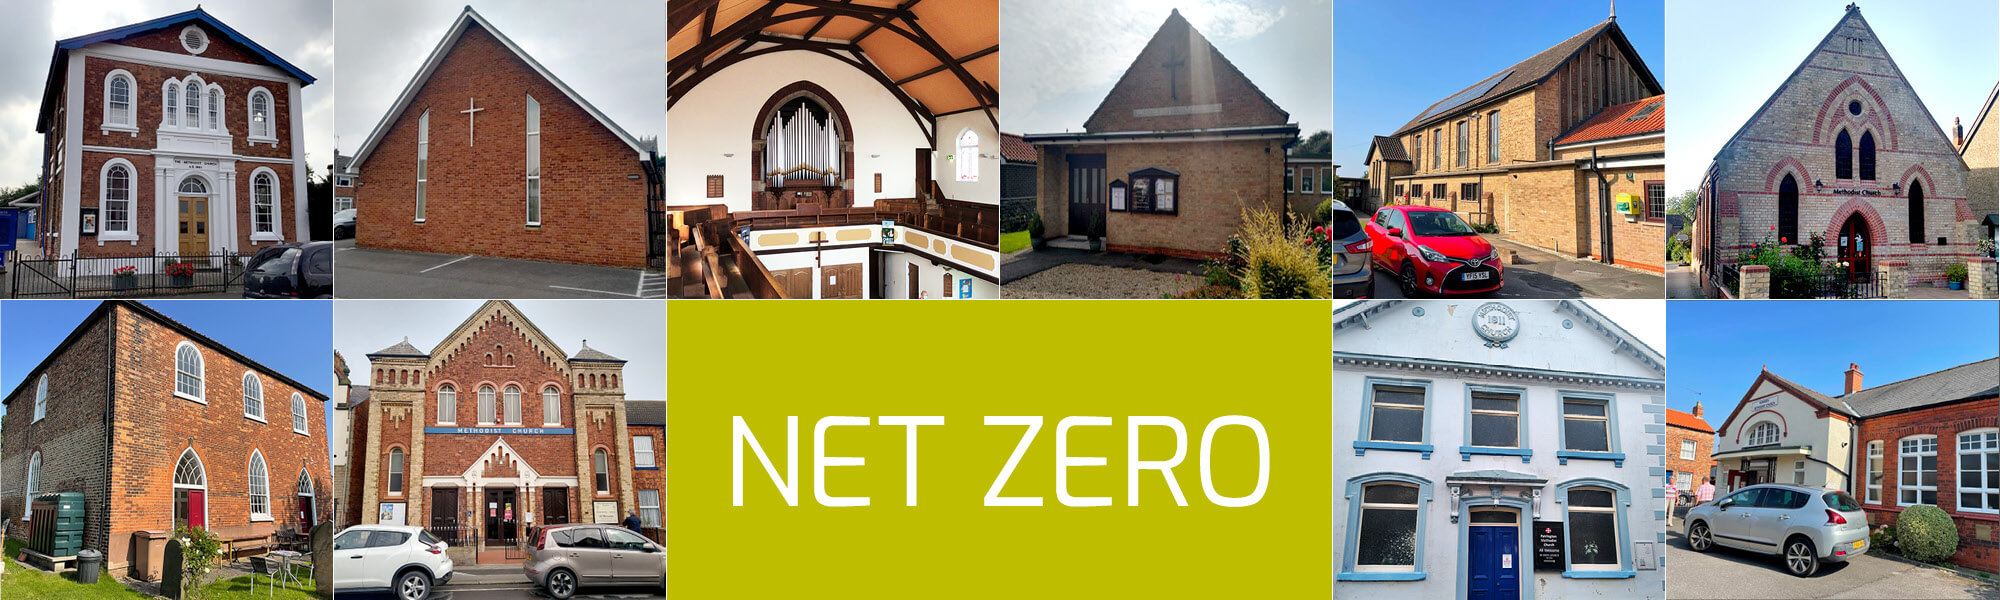 Net Zero Churches - D3 Associates